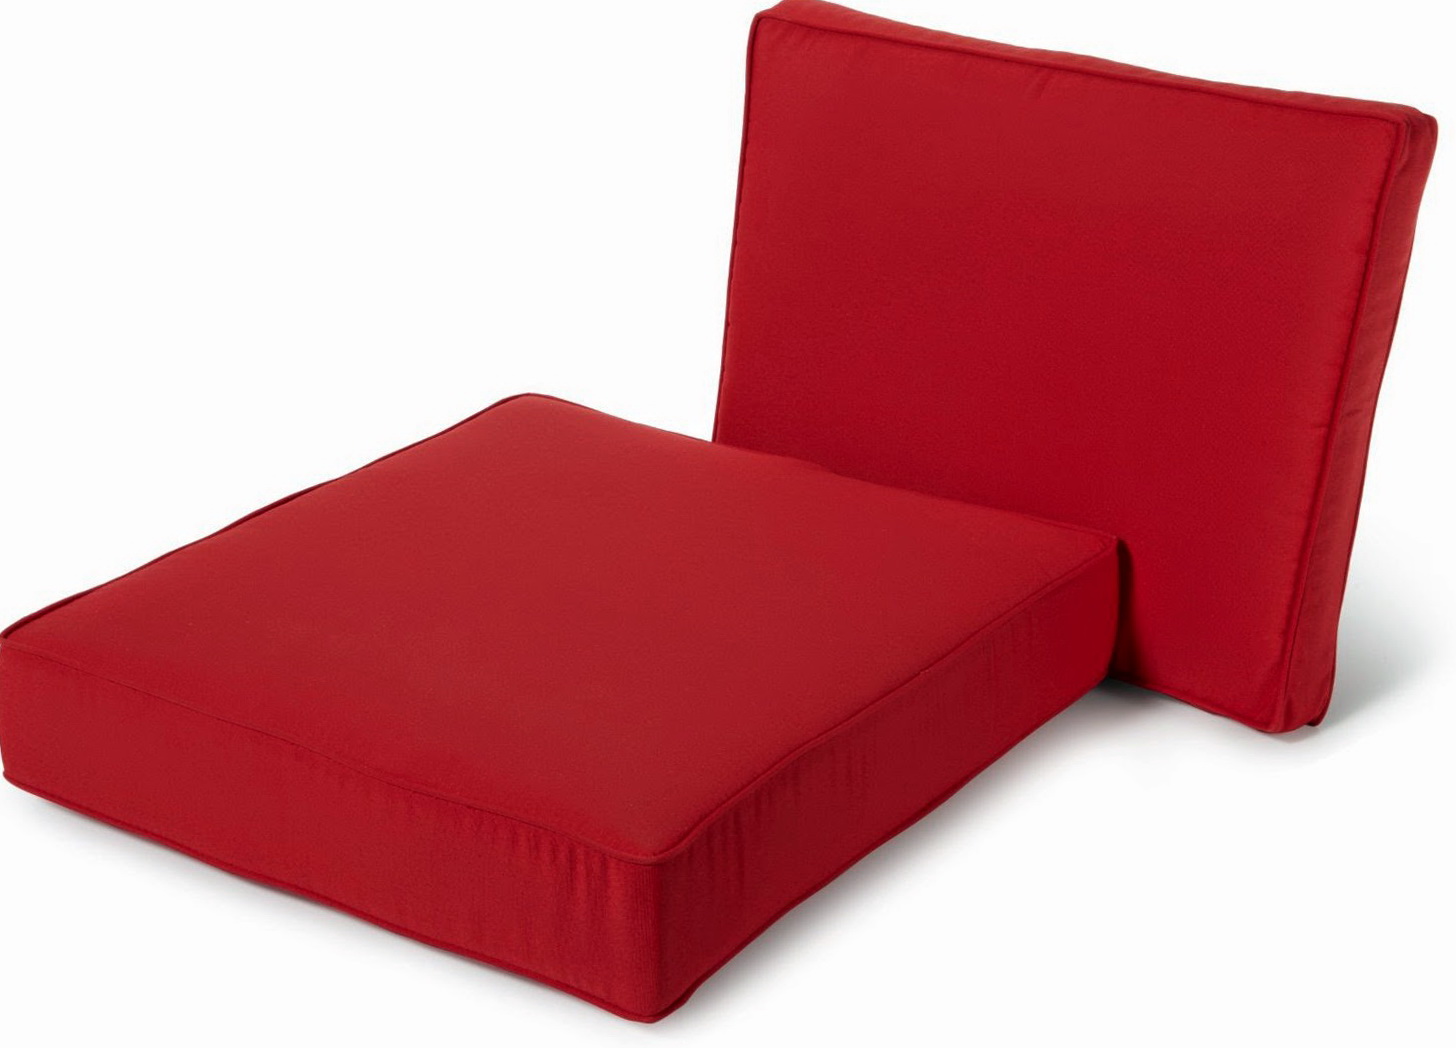 Outdoor Deep Seat Cushions 24×24 Home Design Ideas